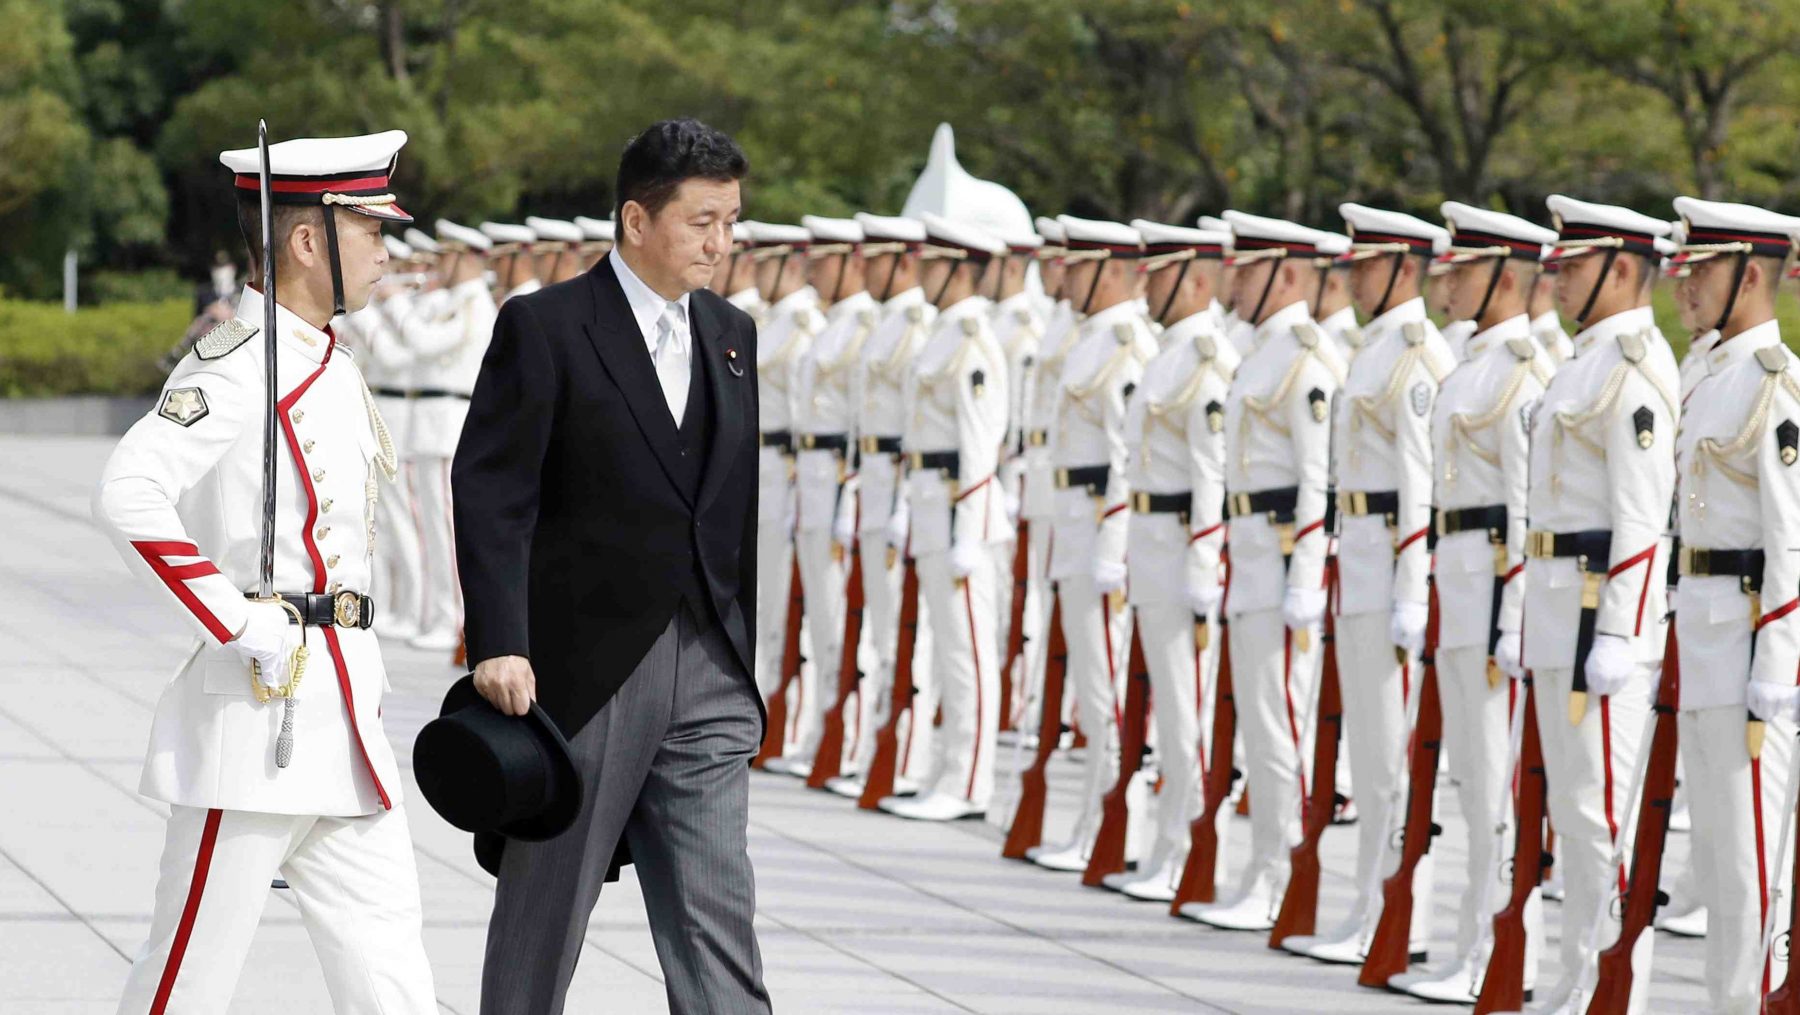 Lawmaker challenges South Korean defense chief on sailors' 'rising